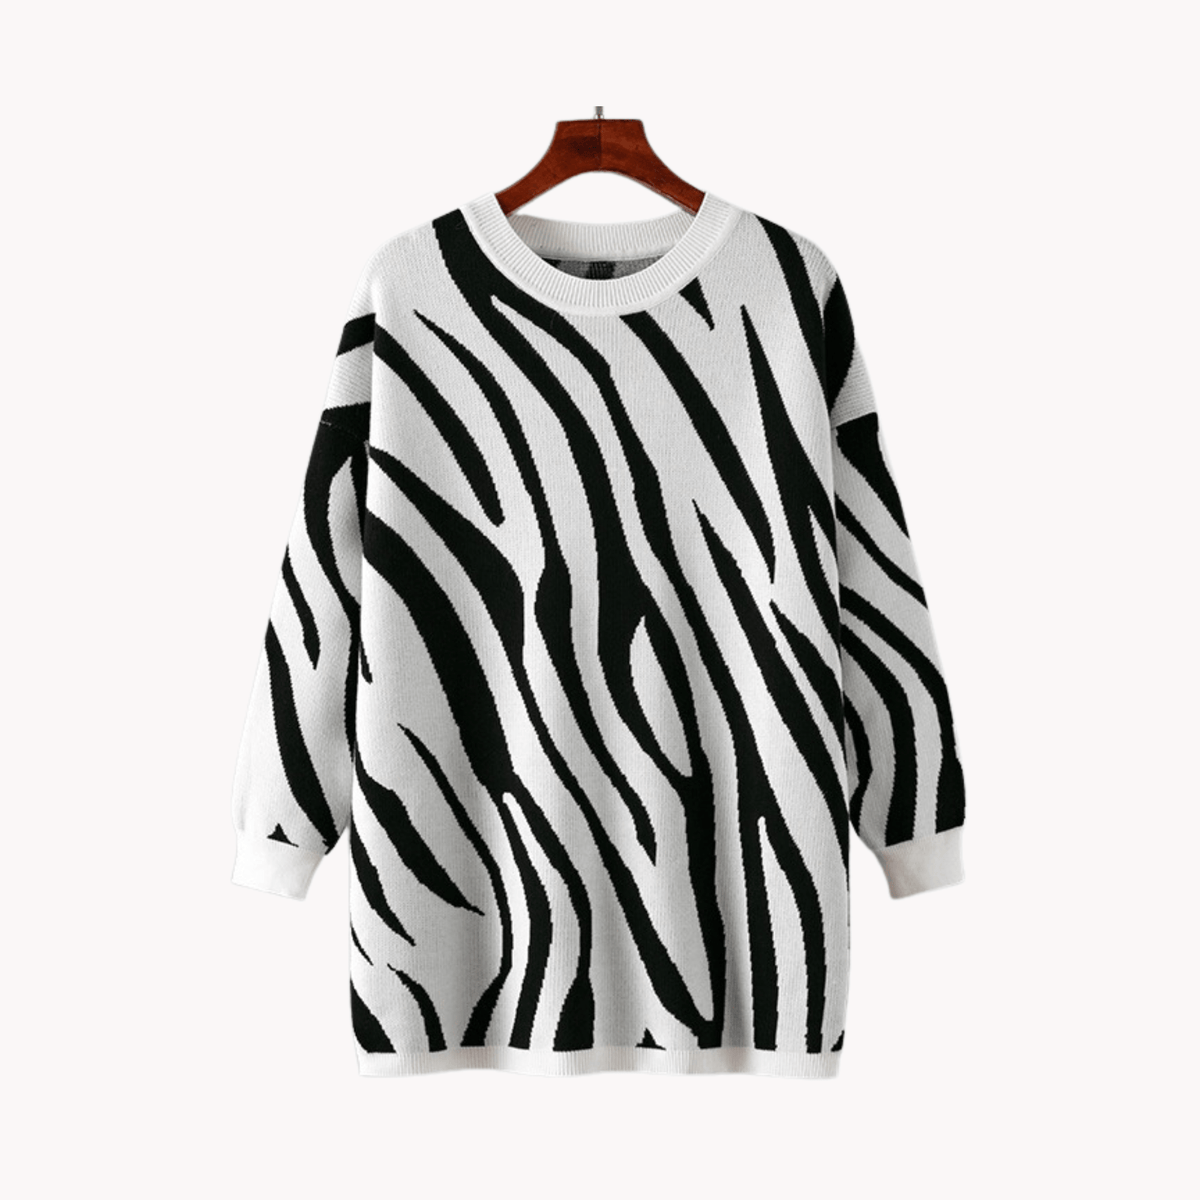 Zebra Loose Fit Knit Sweater - Kelly Obi New York